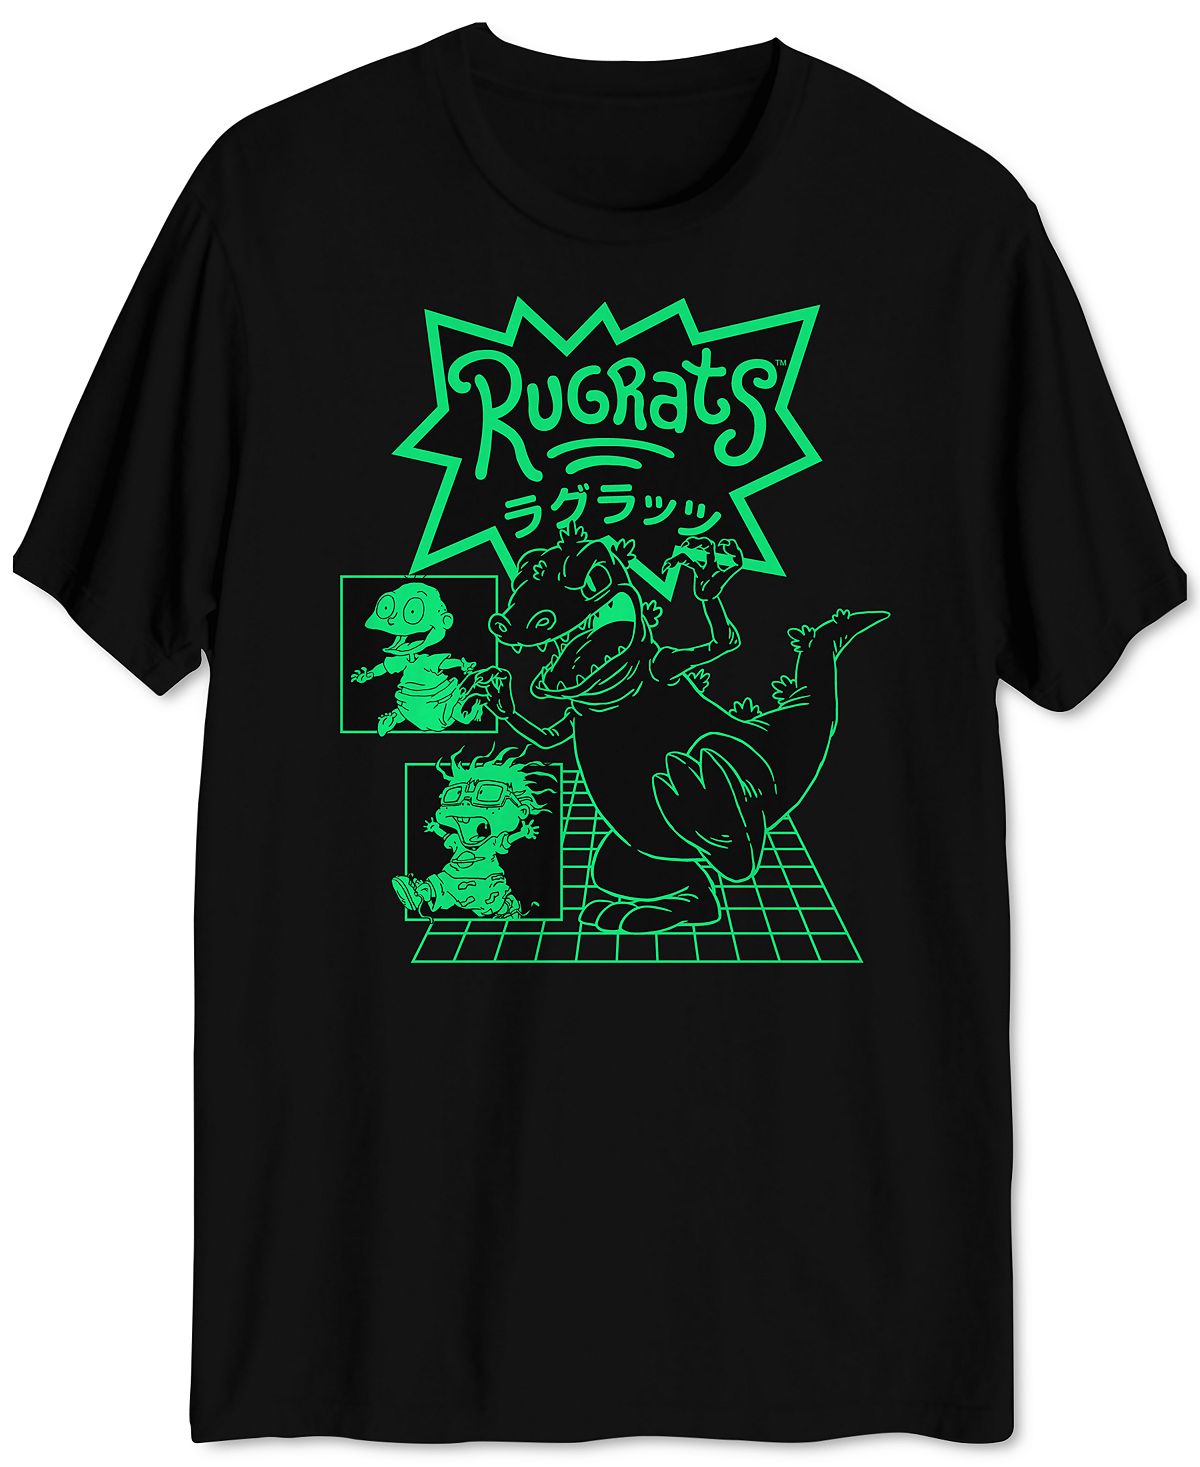 Hybrid Reptar Rugrats Graphic T-shirt Black